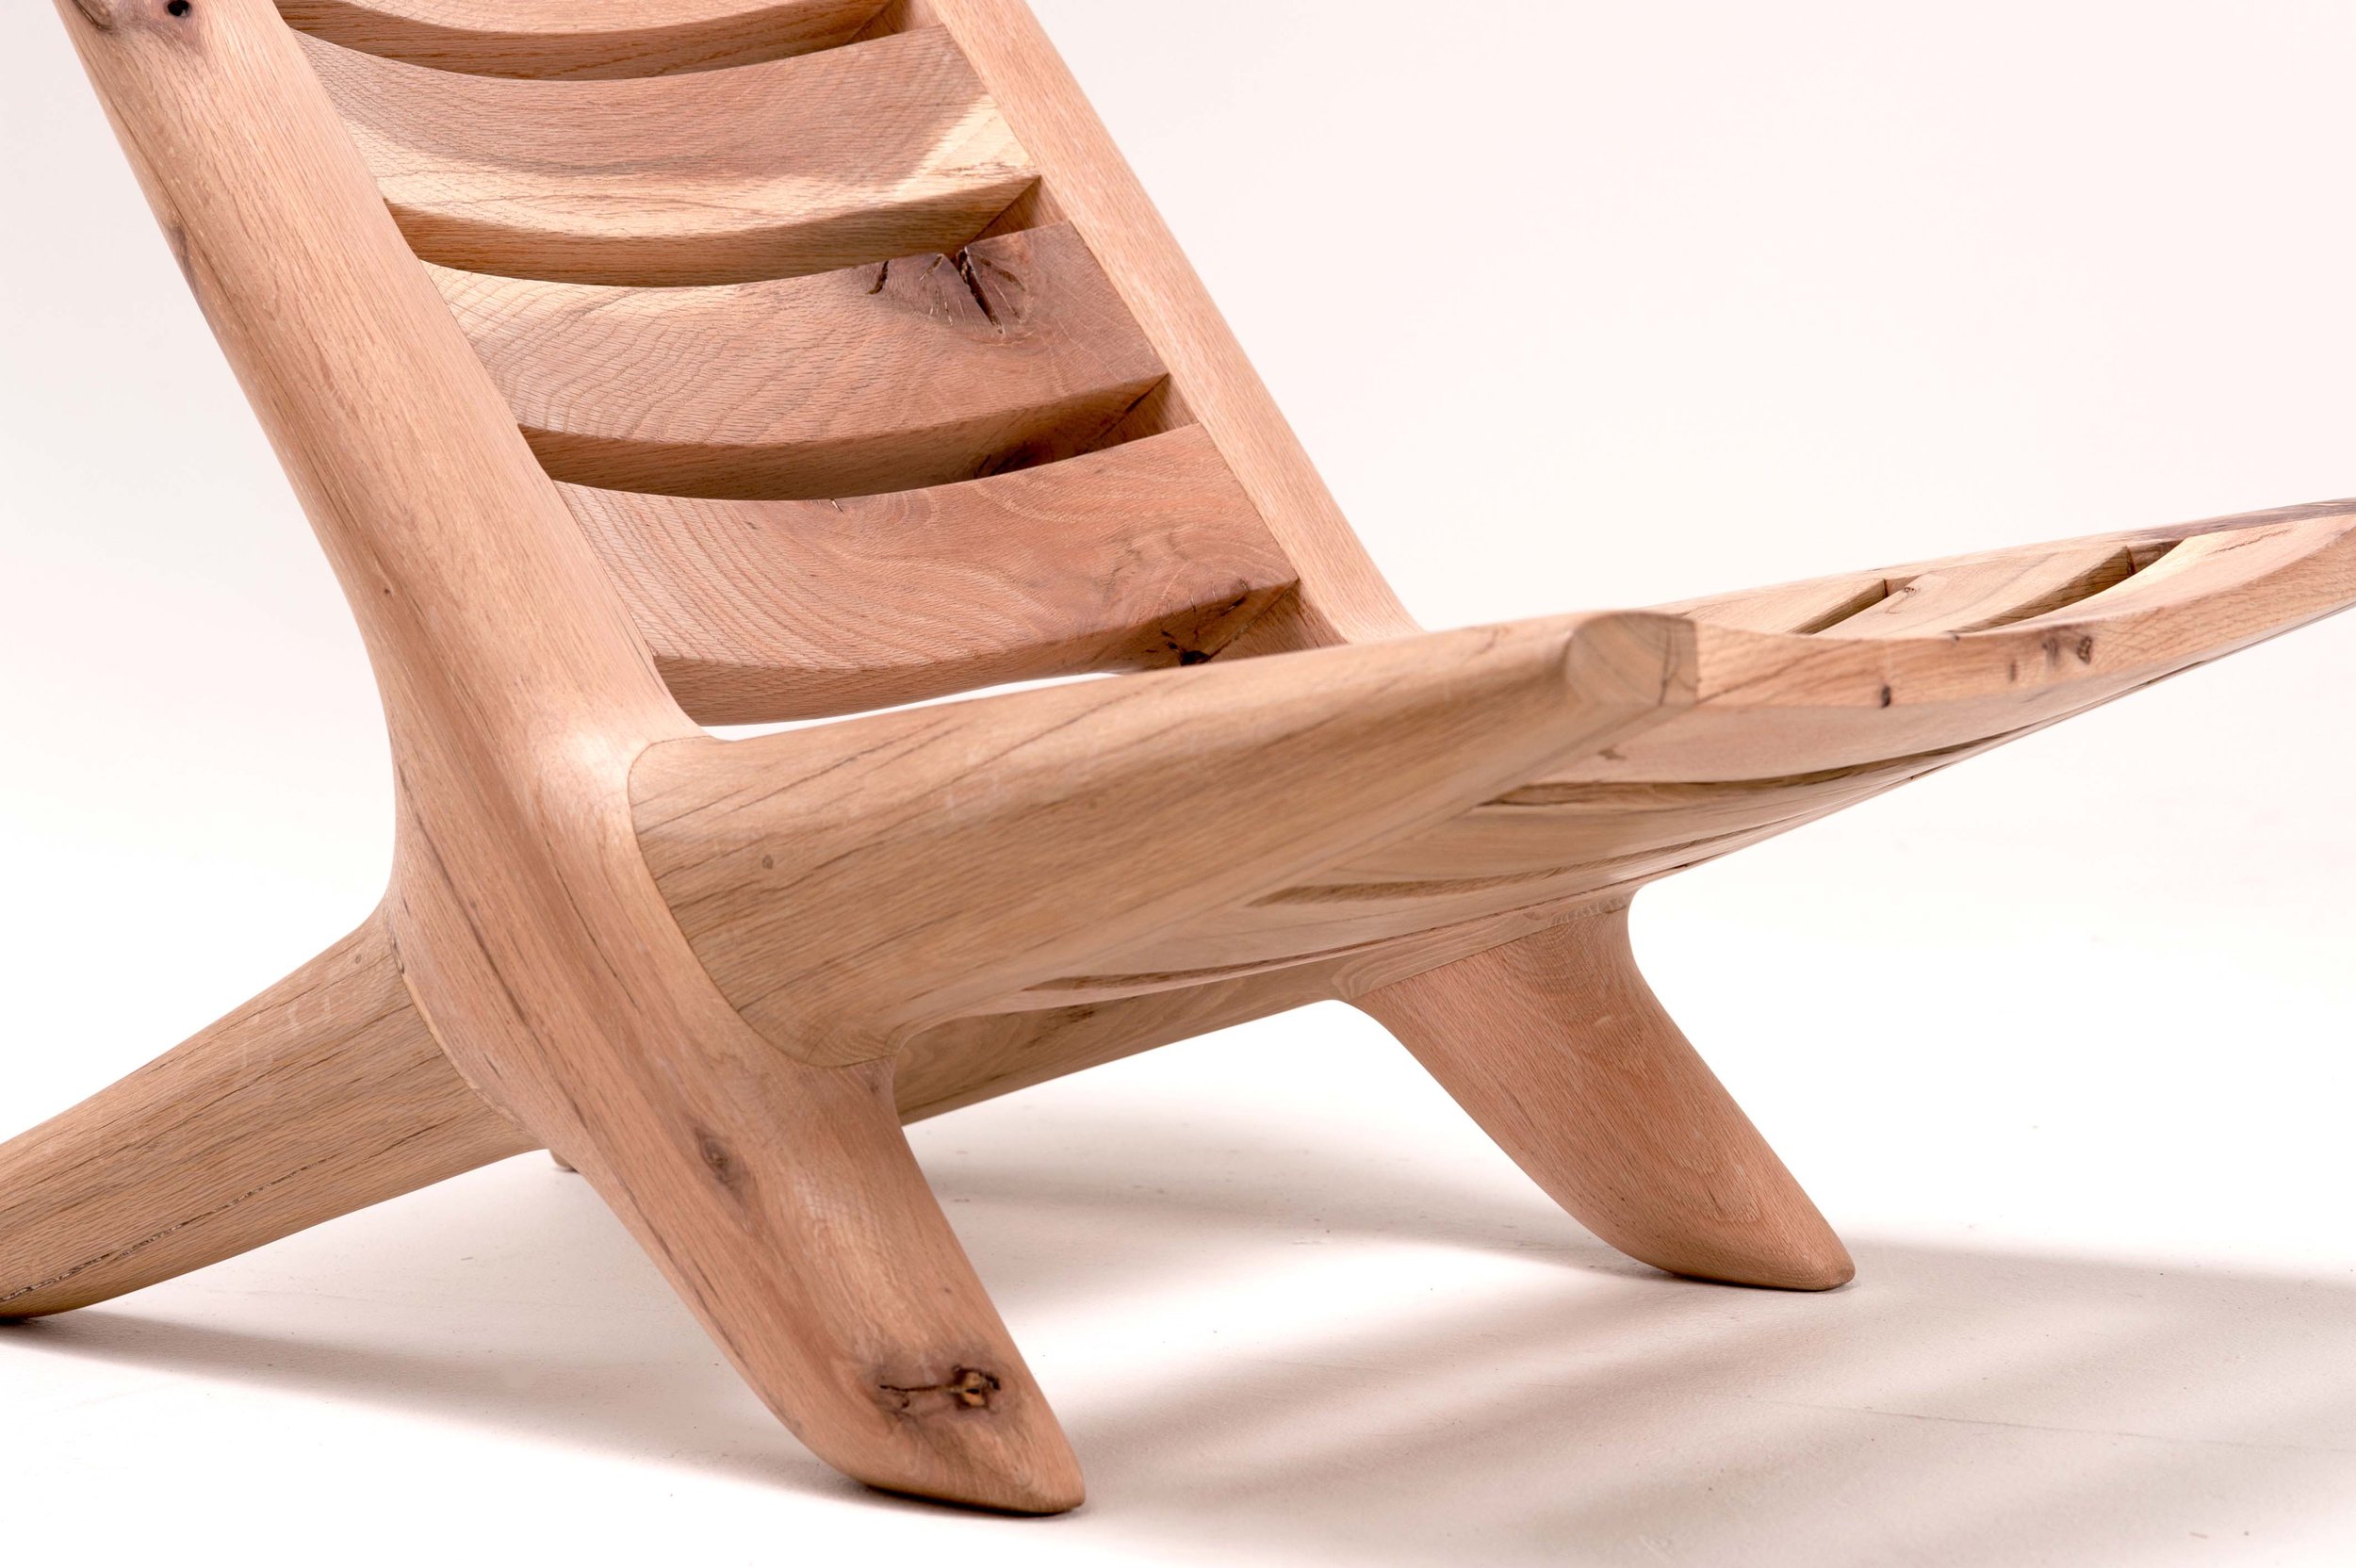 Cool CNC Lounge Chair Design - Make